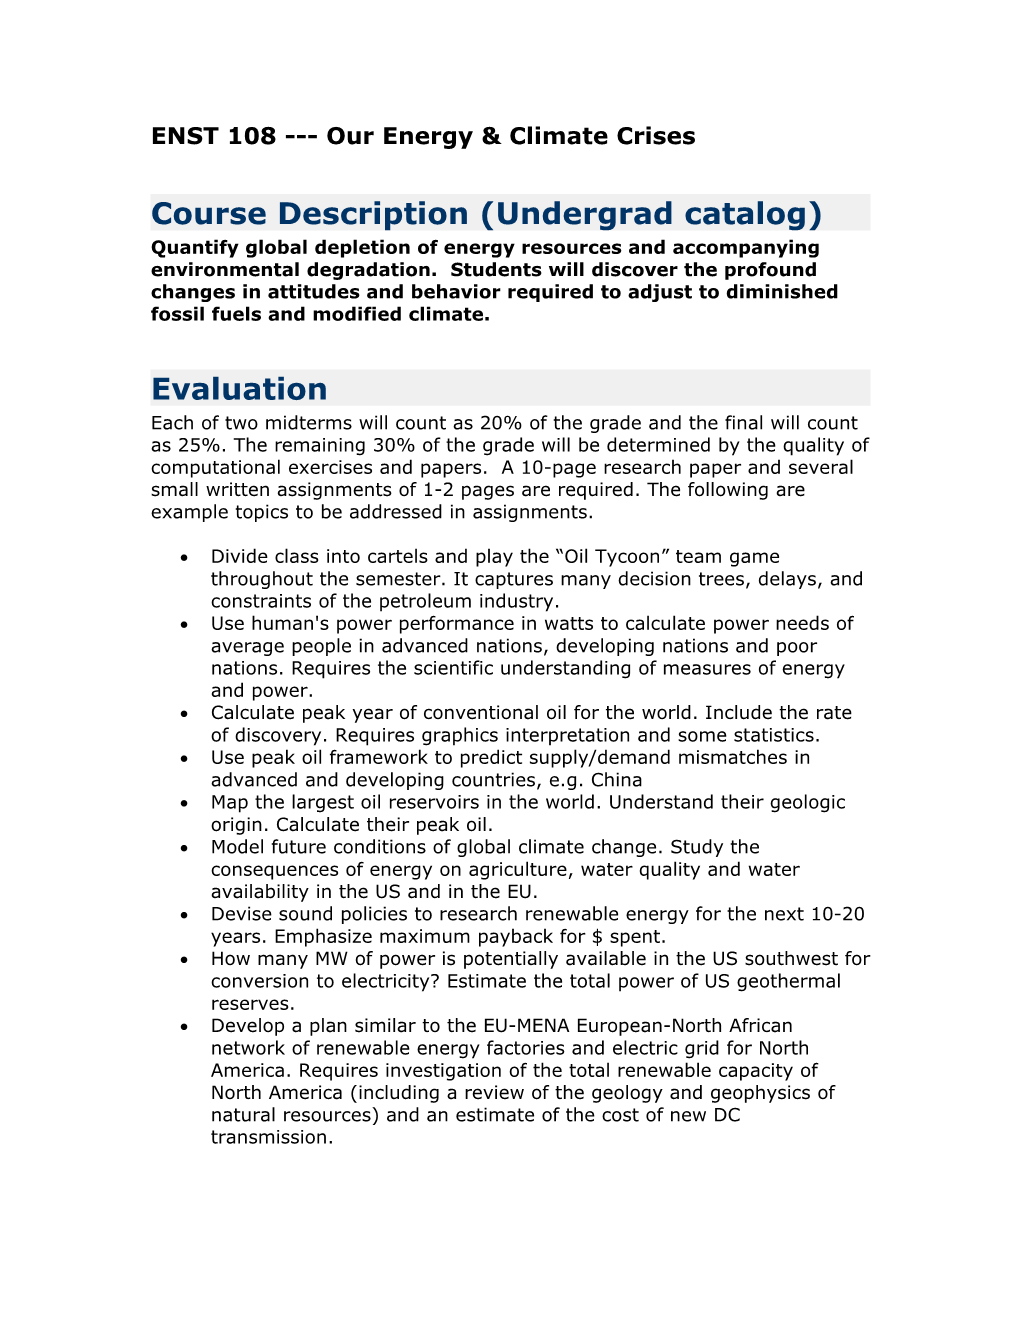 Course Description (For Undergrad Catalog)